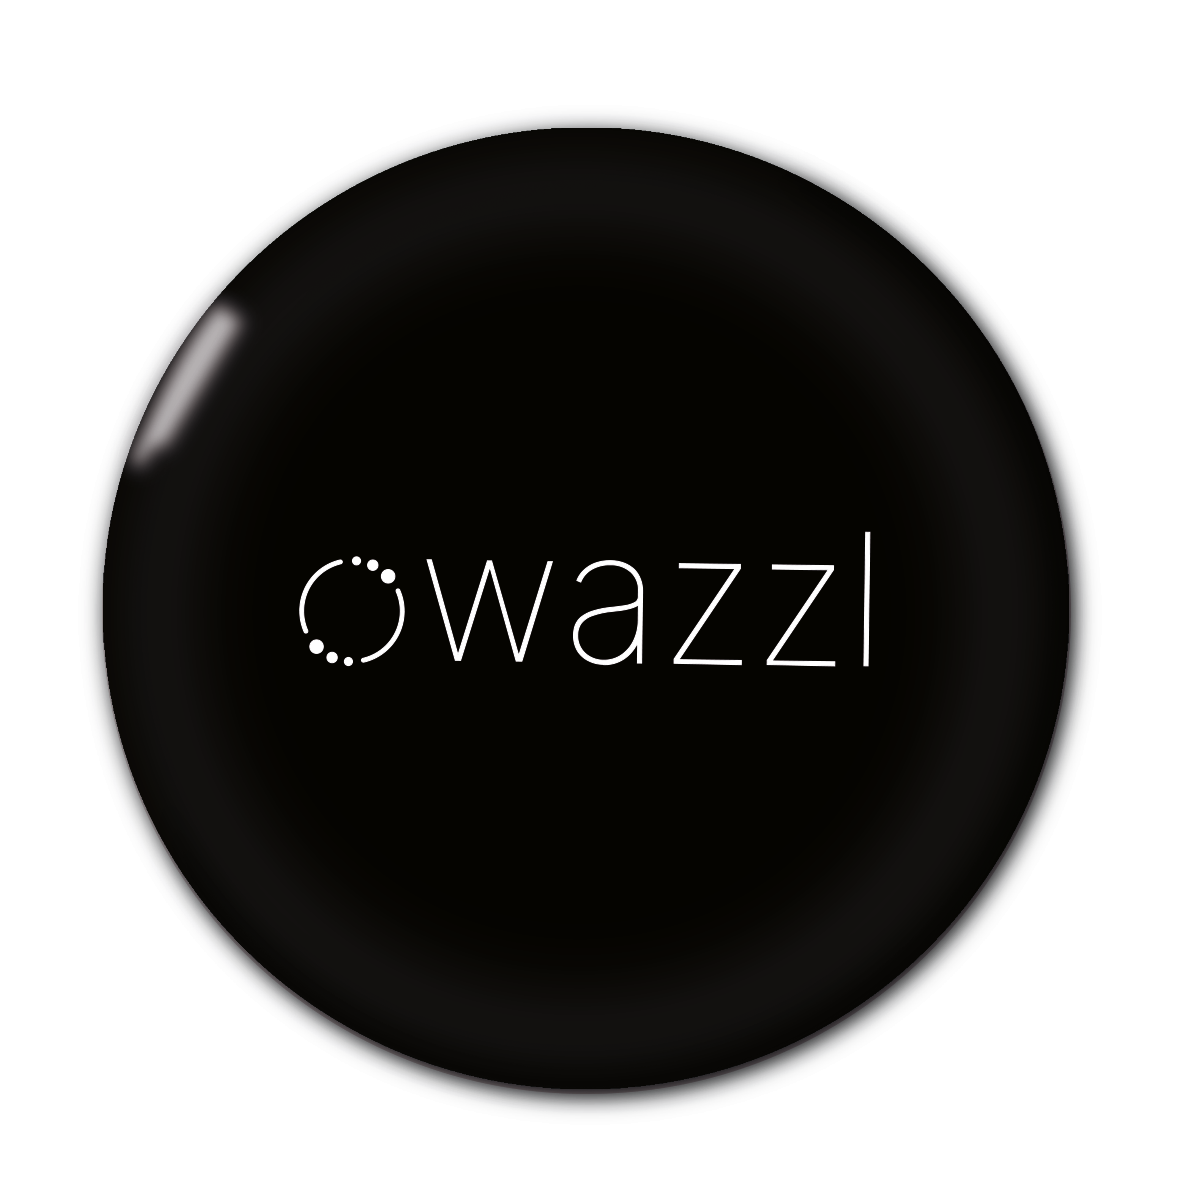 wazzl black - Digitale Visitenkarte NFC